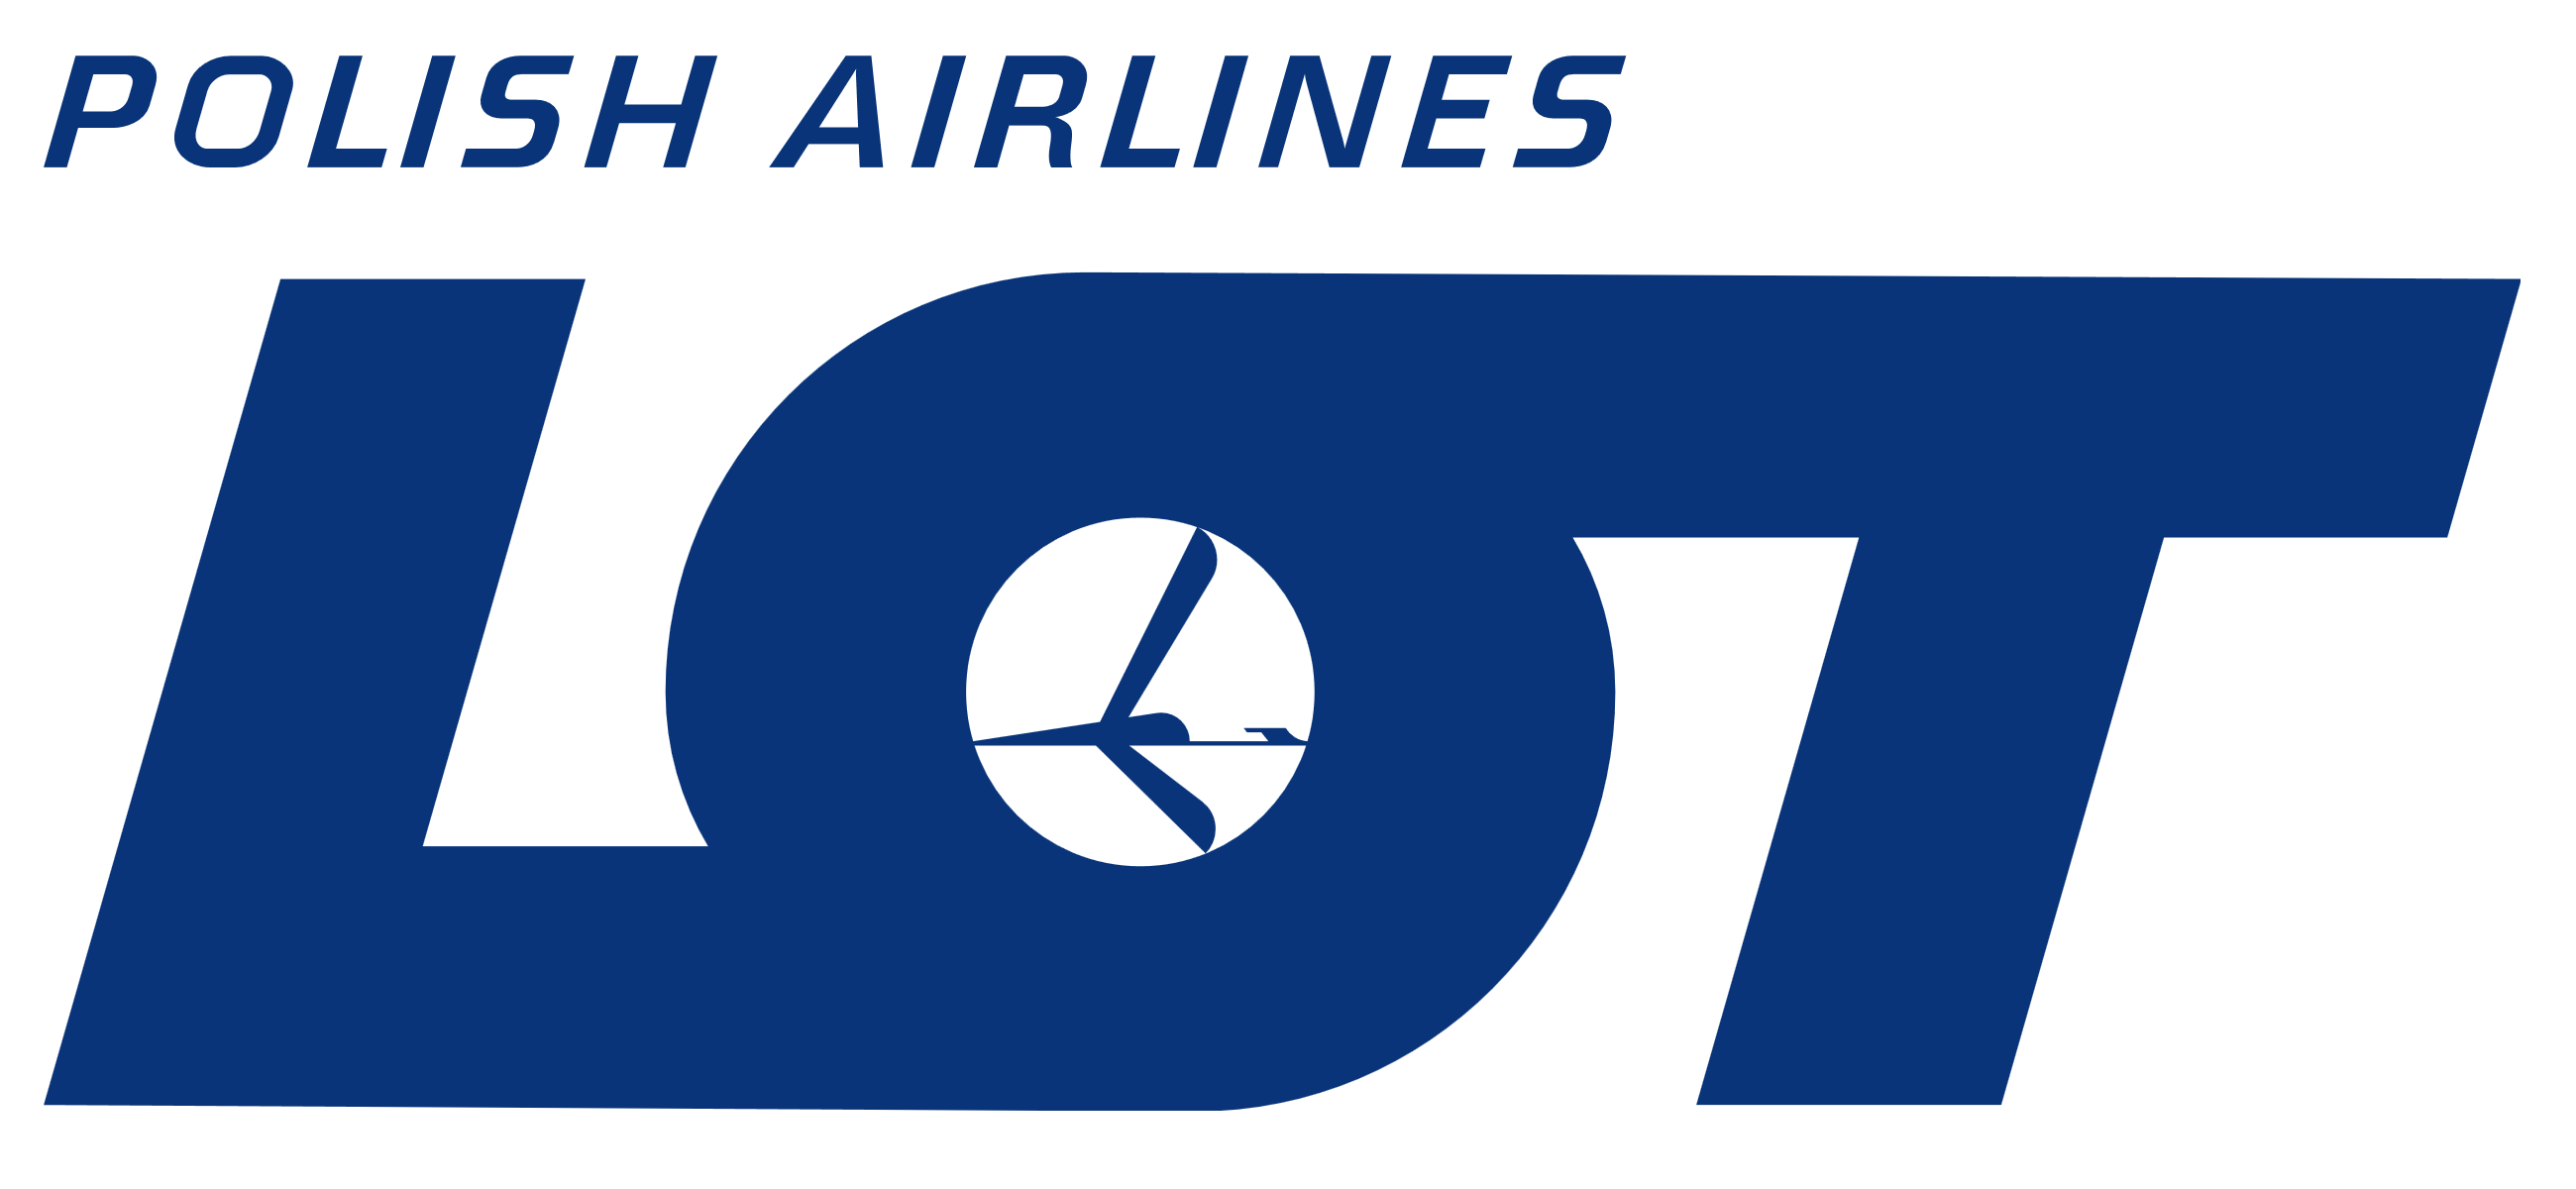 LOT Polish Airlines logo, logotype